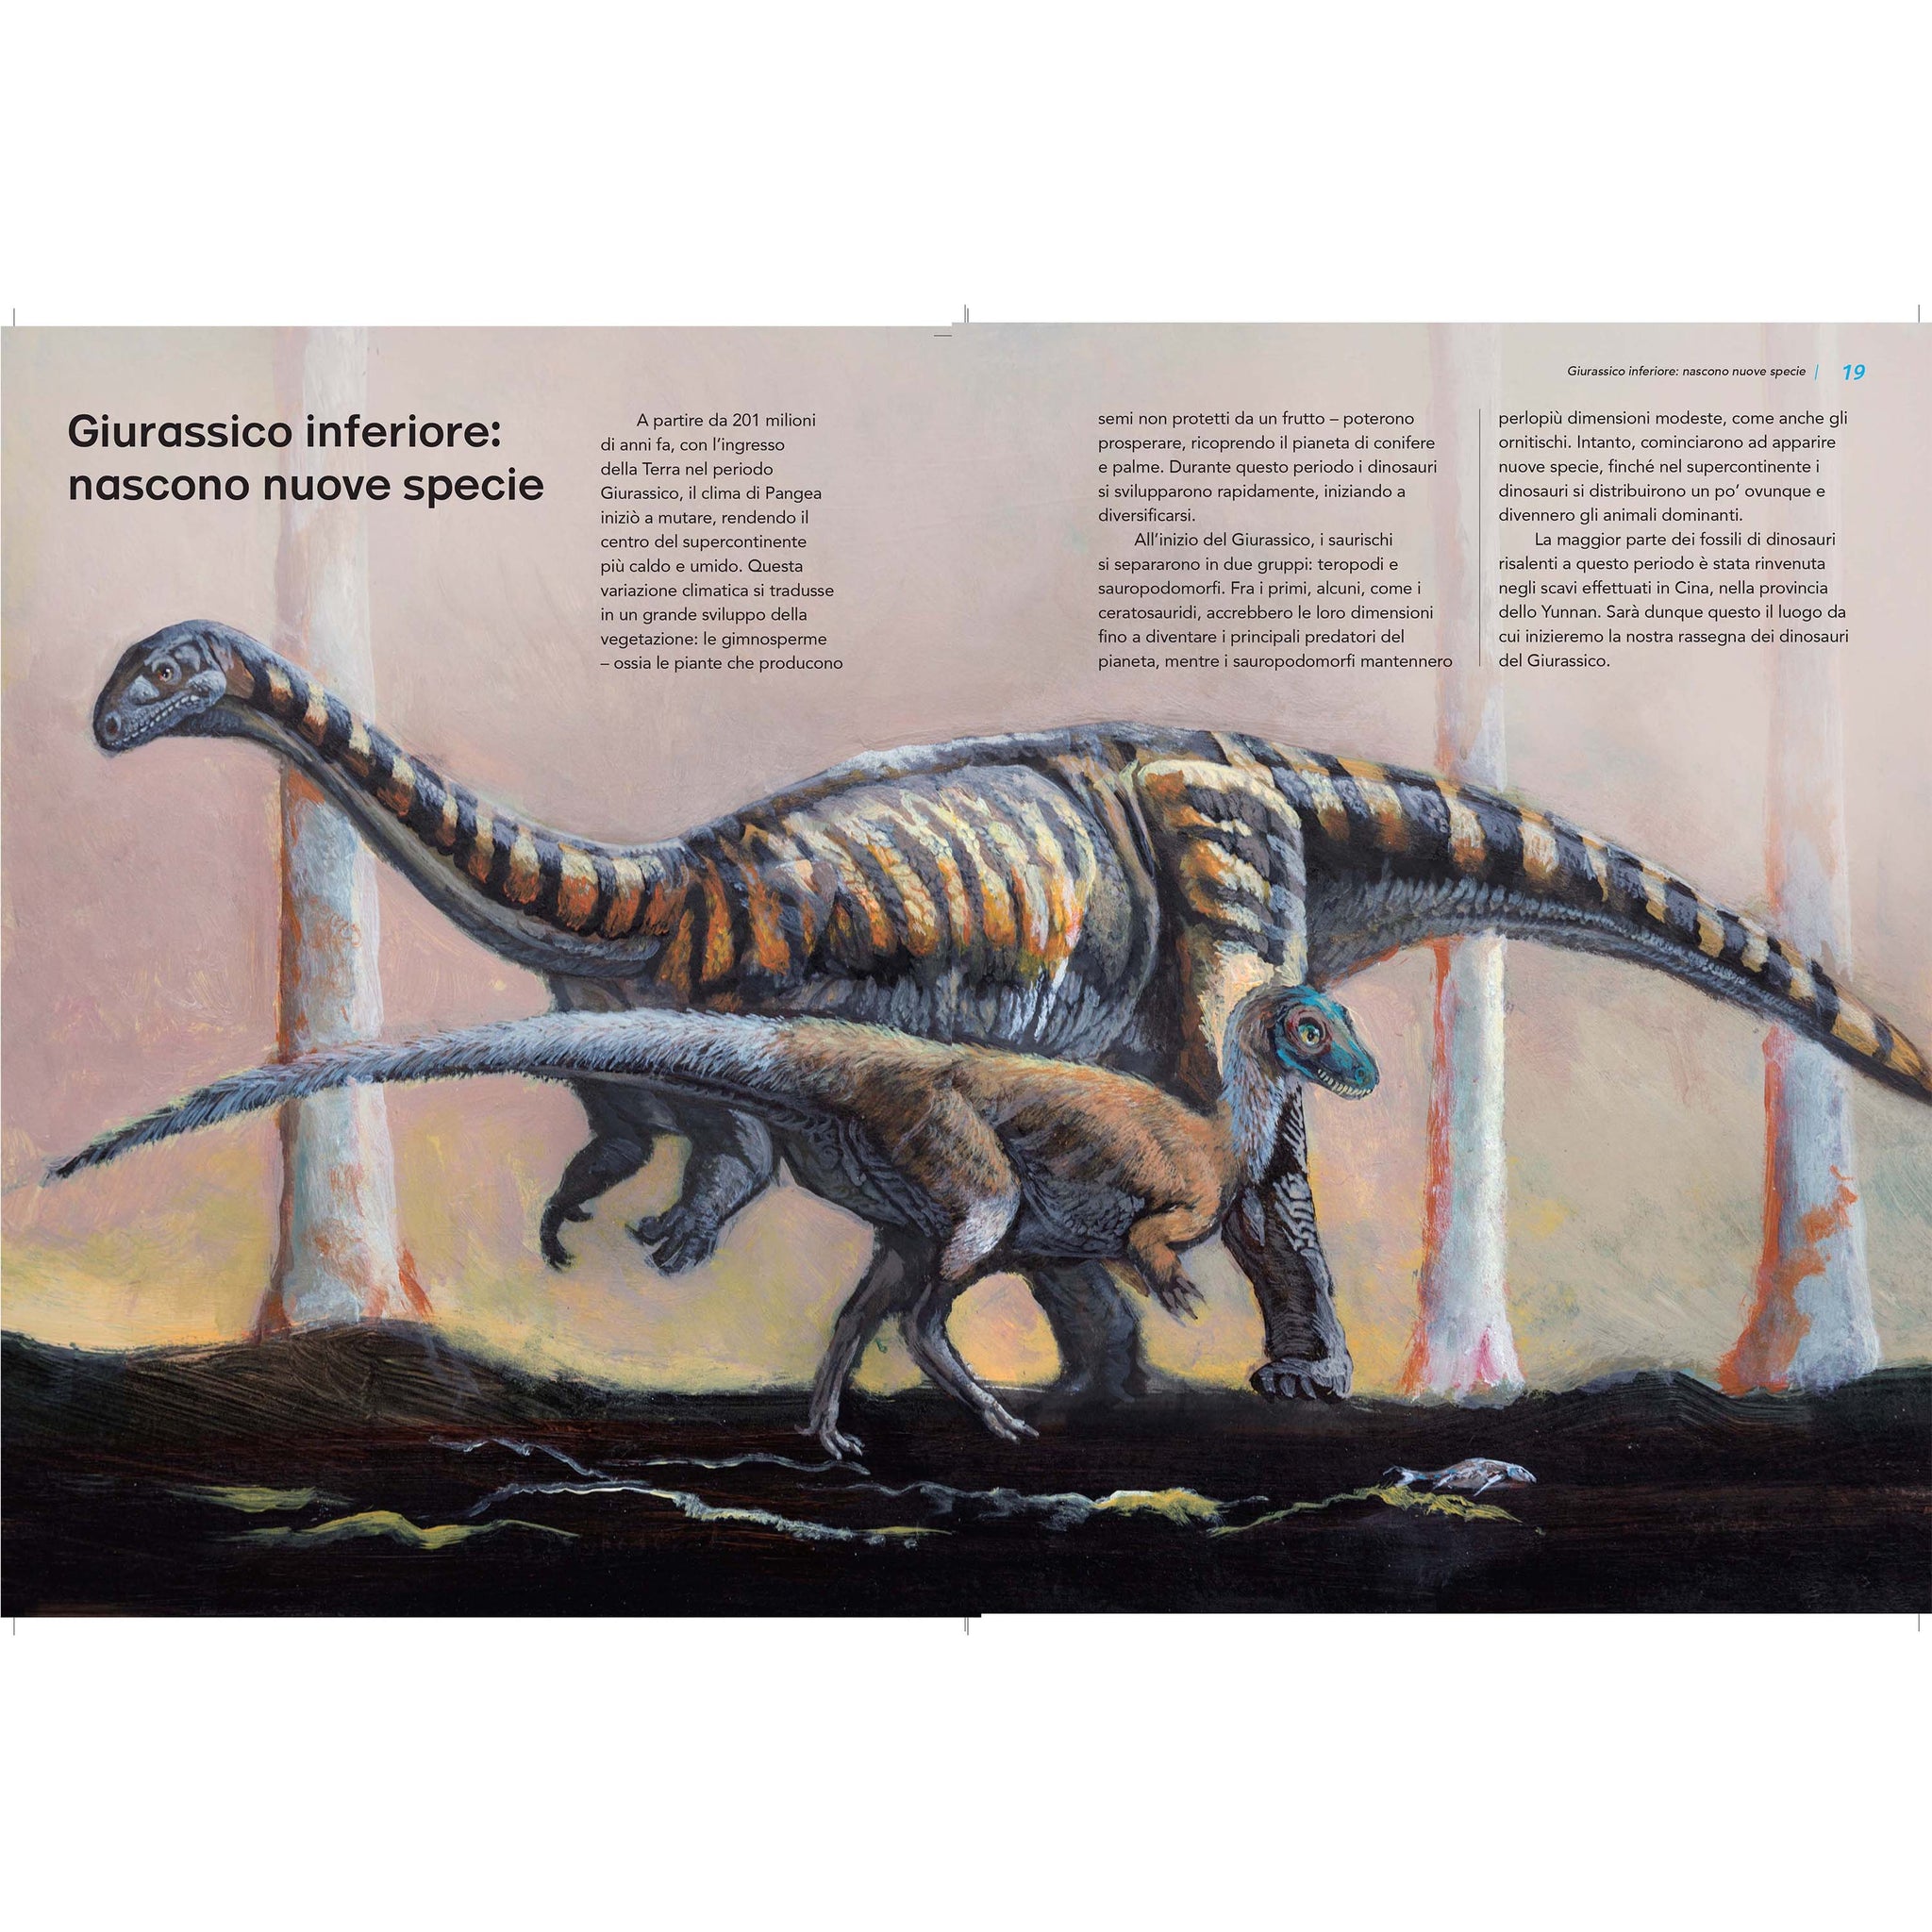 Dinosaurs - Birth, splendor, extinction